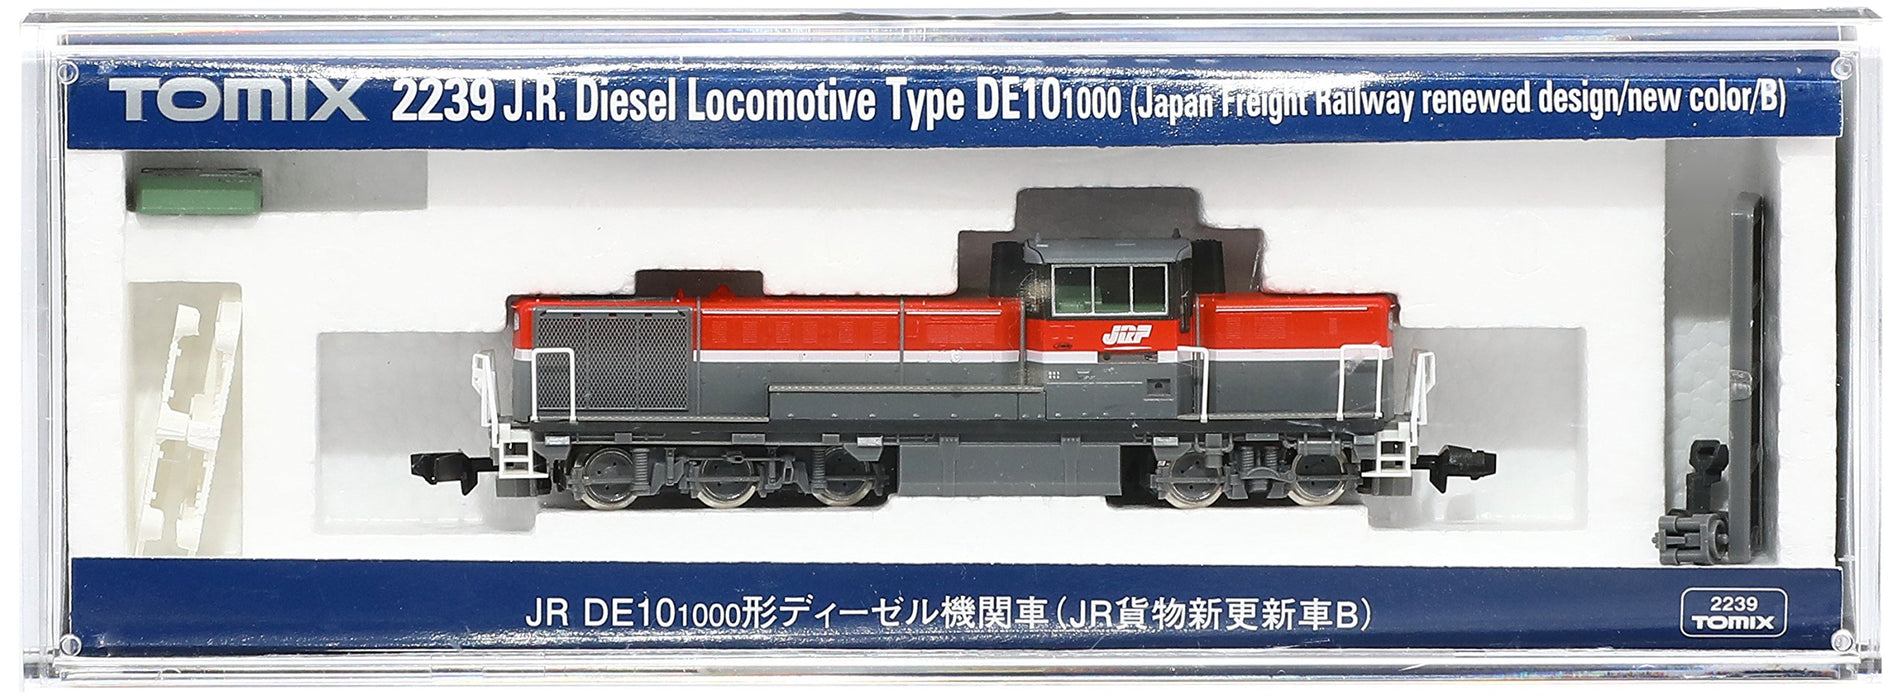 Tomytec Tomix N Gauge DE10 1000 Diesel Locomotive - JR Freight Newly Updated Model 2239